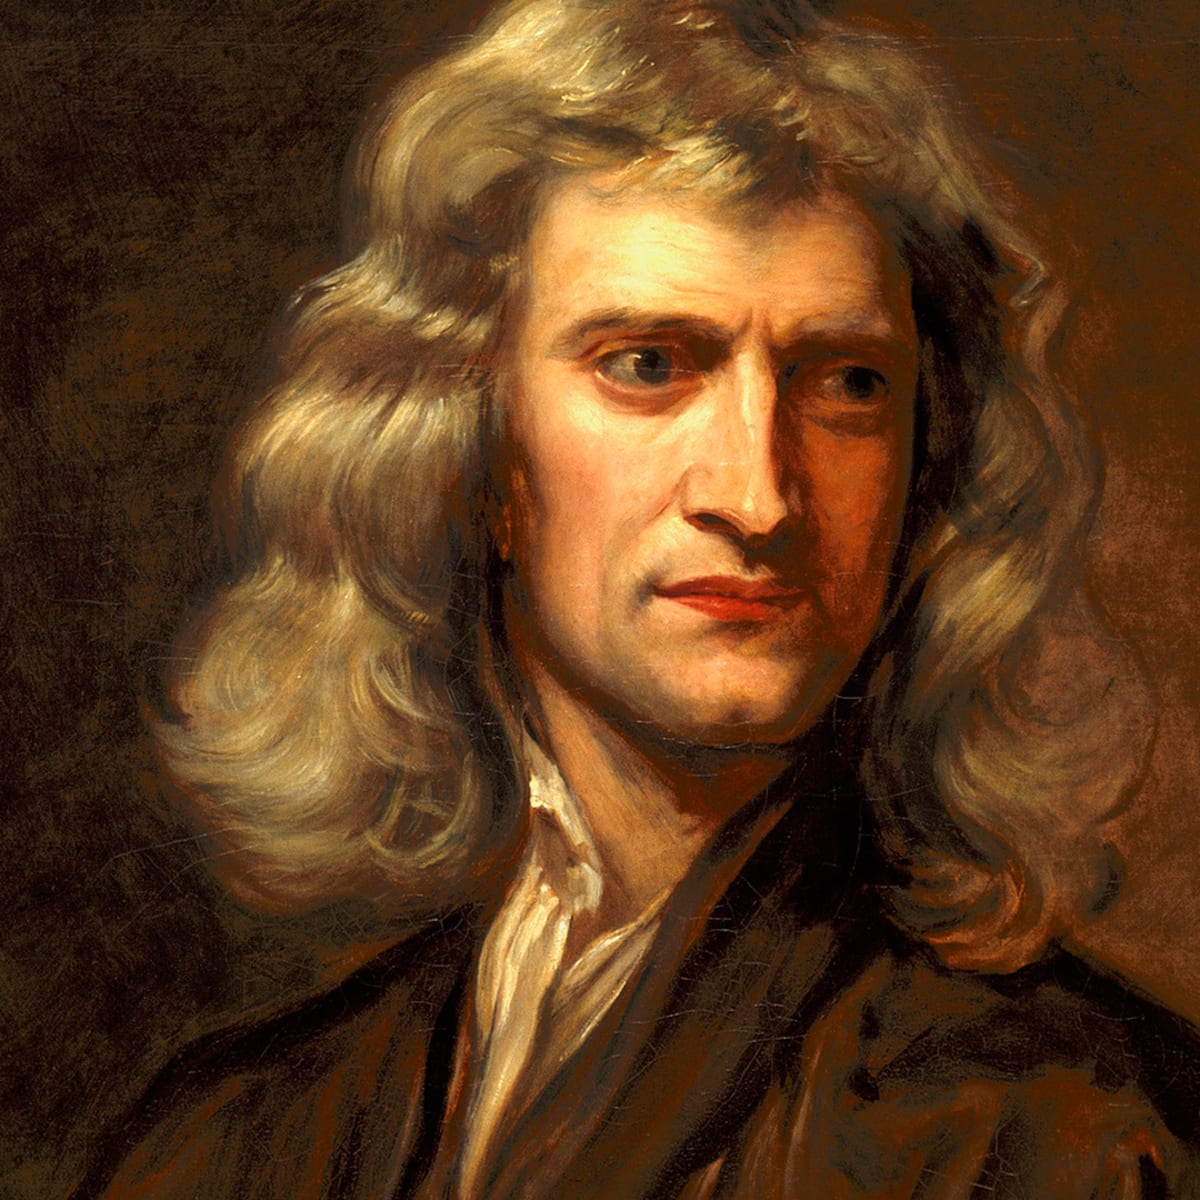 Newton's Laws 